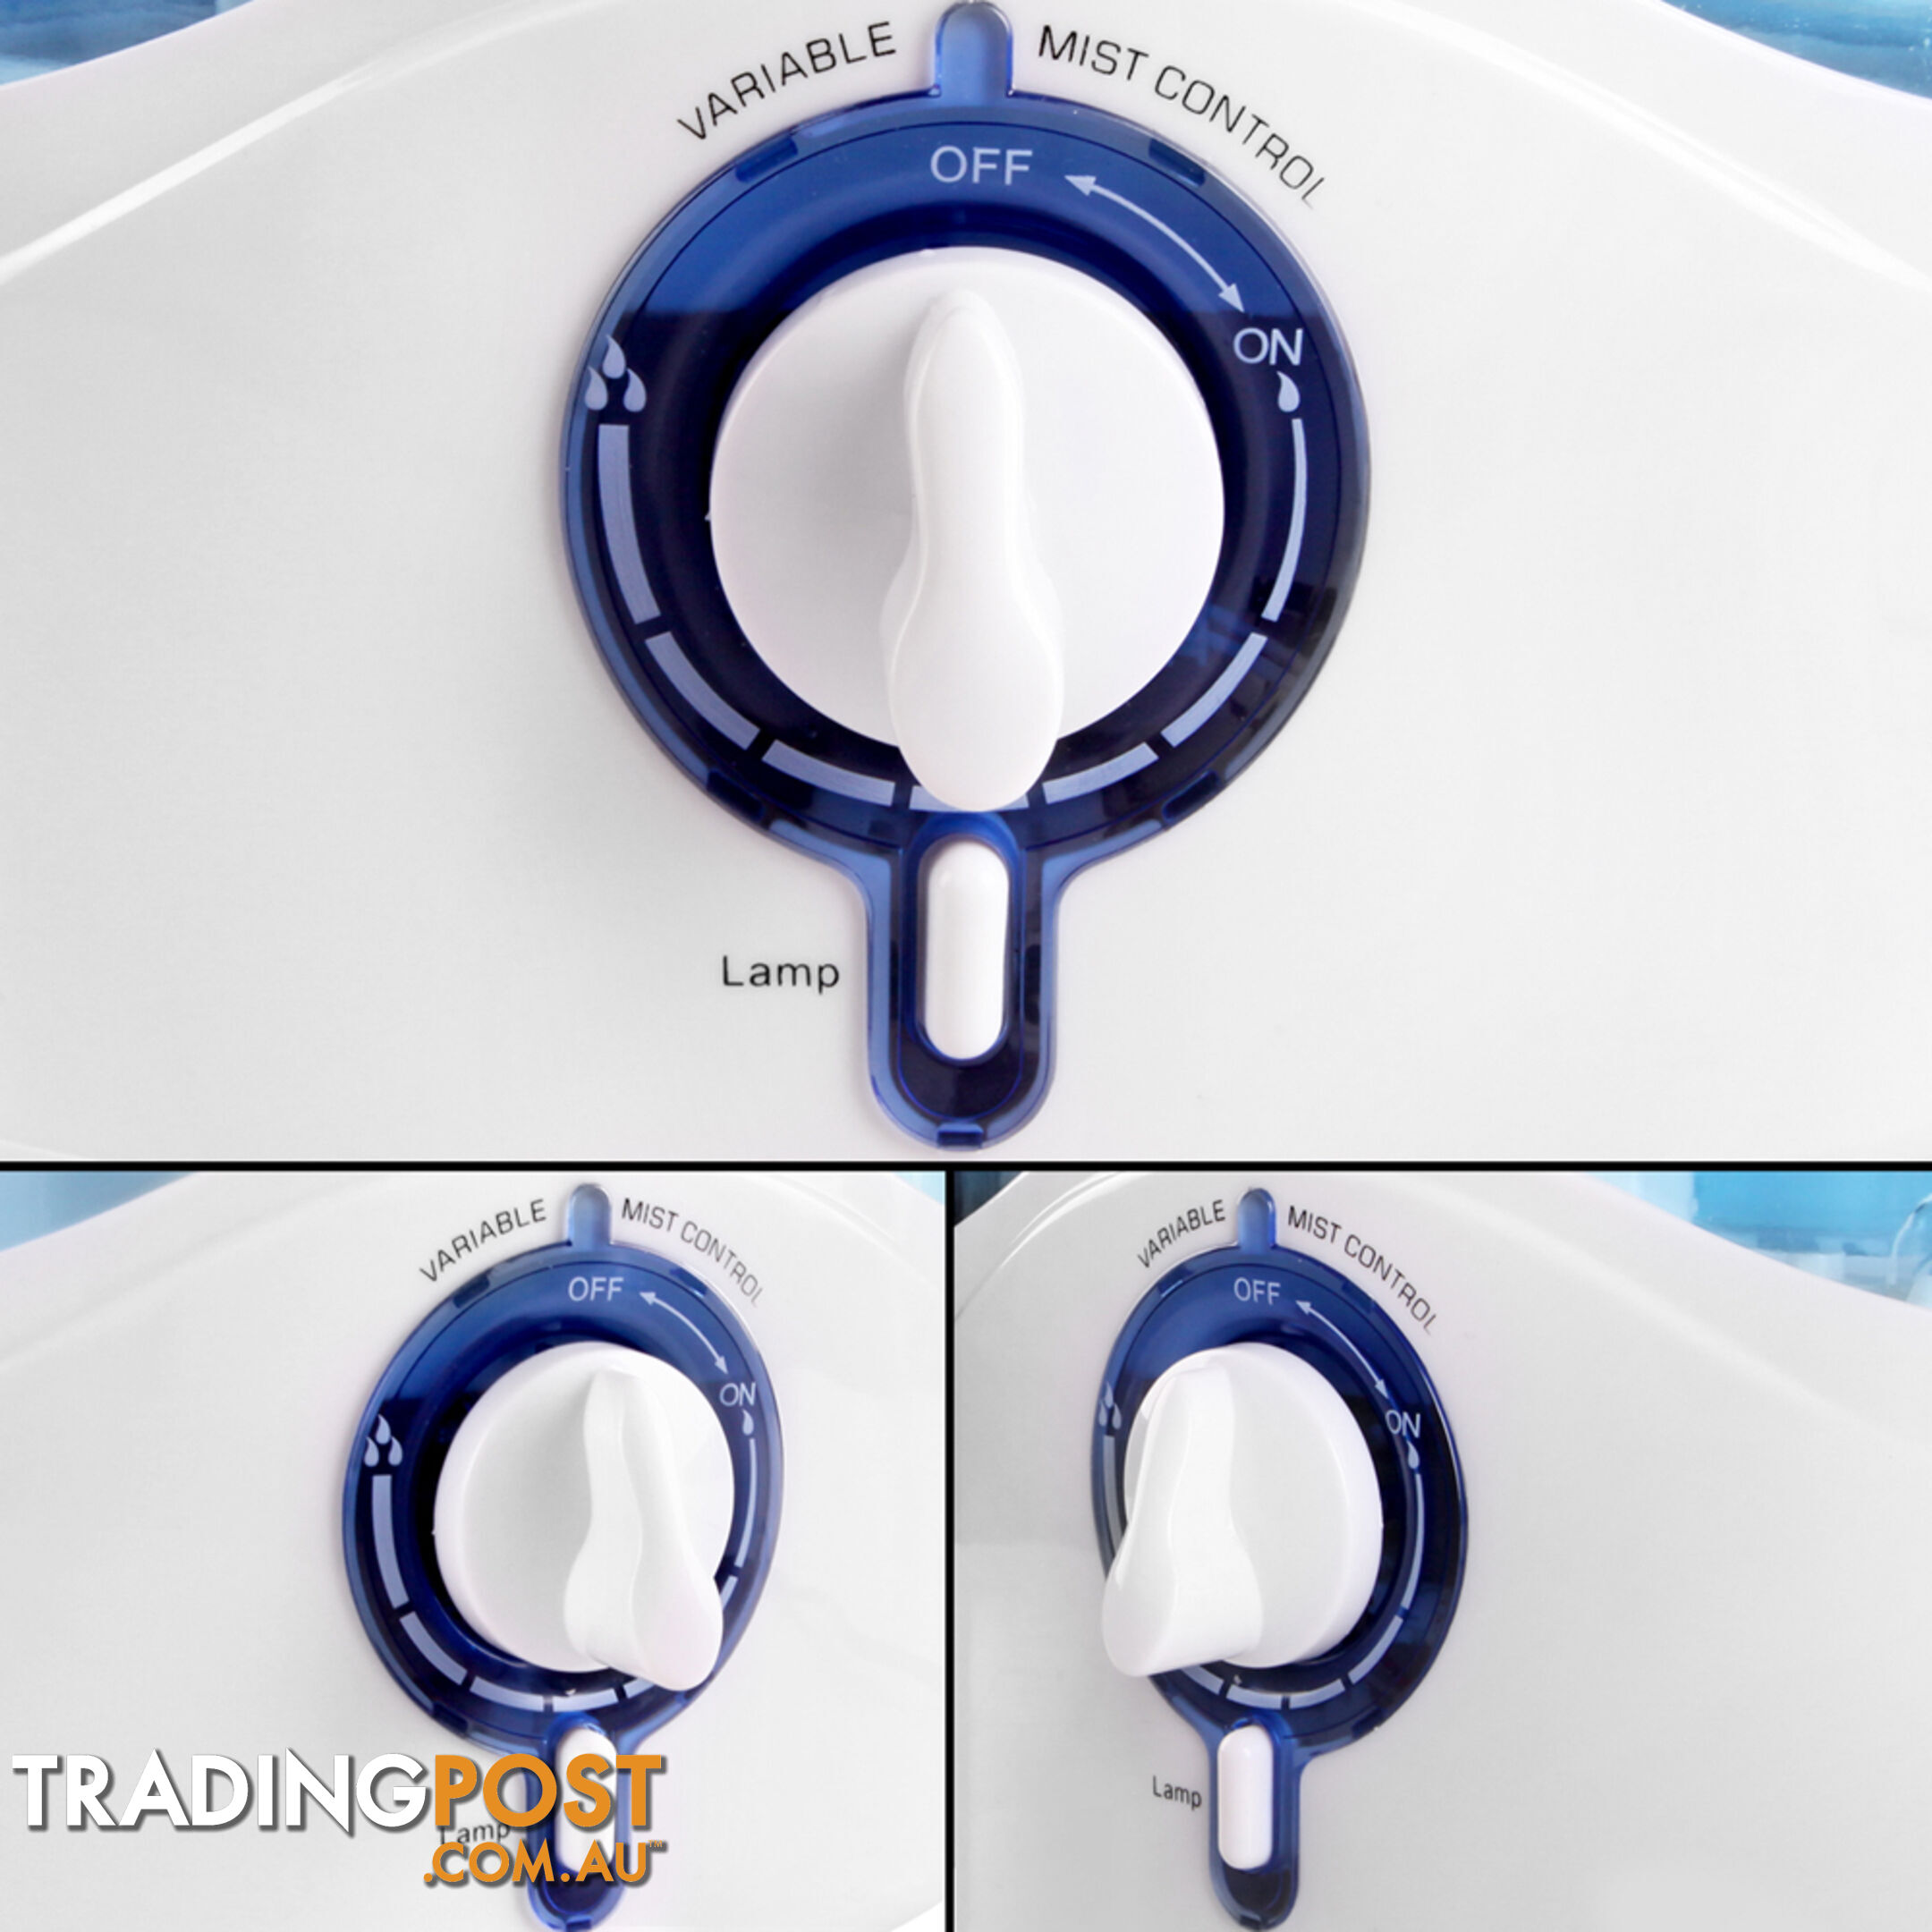 Ultrasonic Cool Mist Air Humidifier 4.5L White Blue